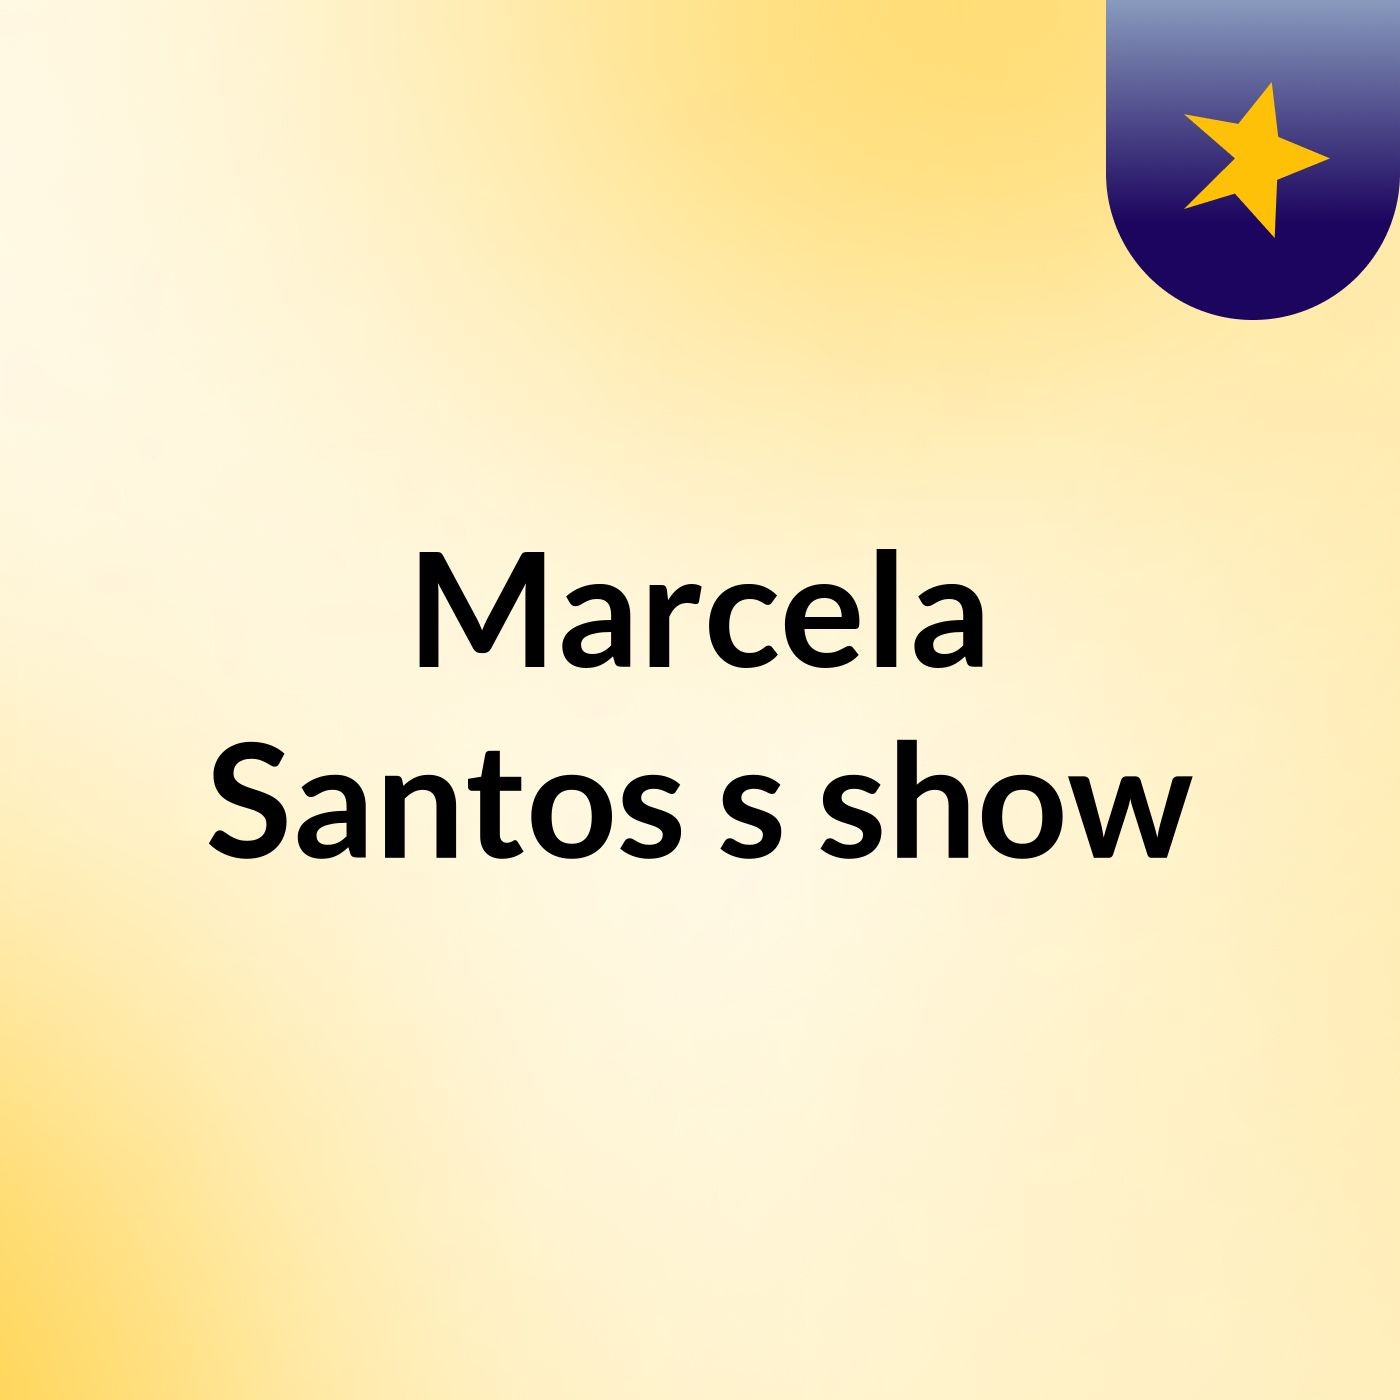 Marcela Santos's show